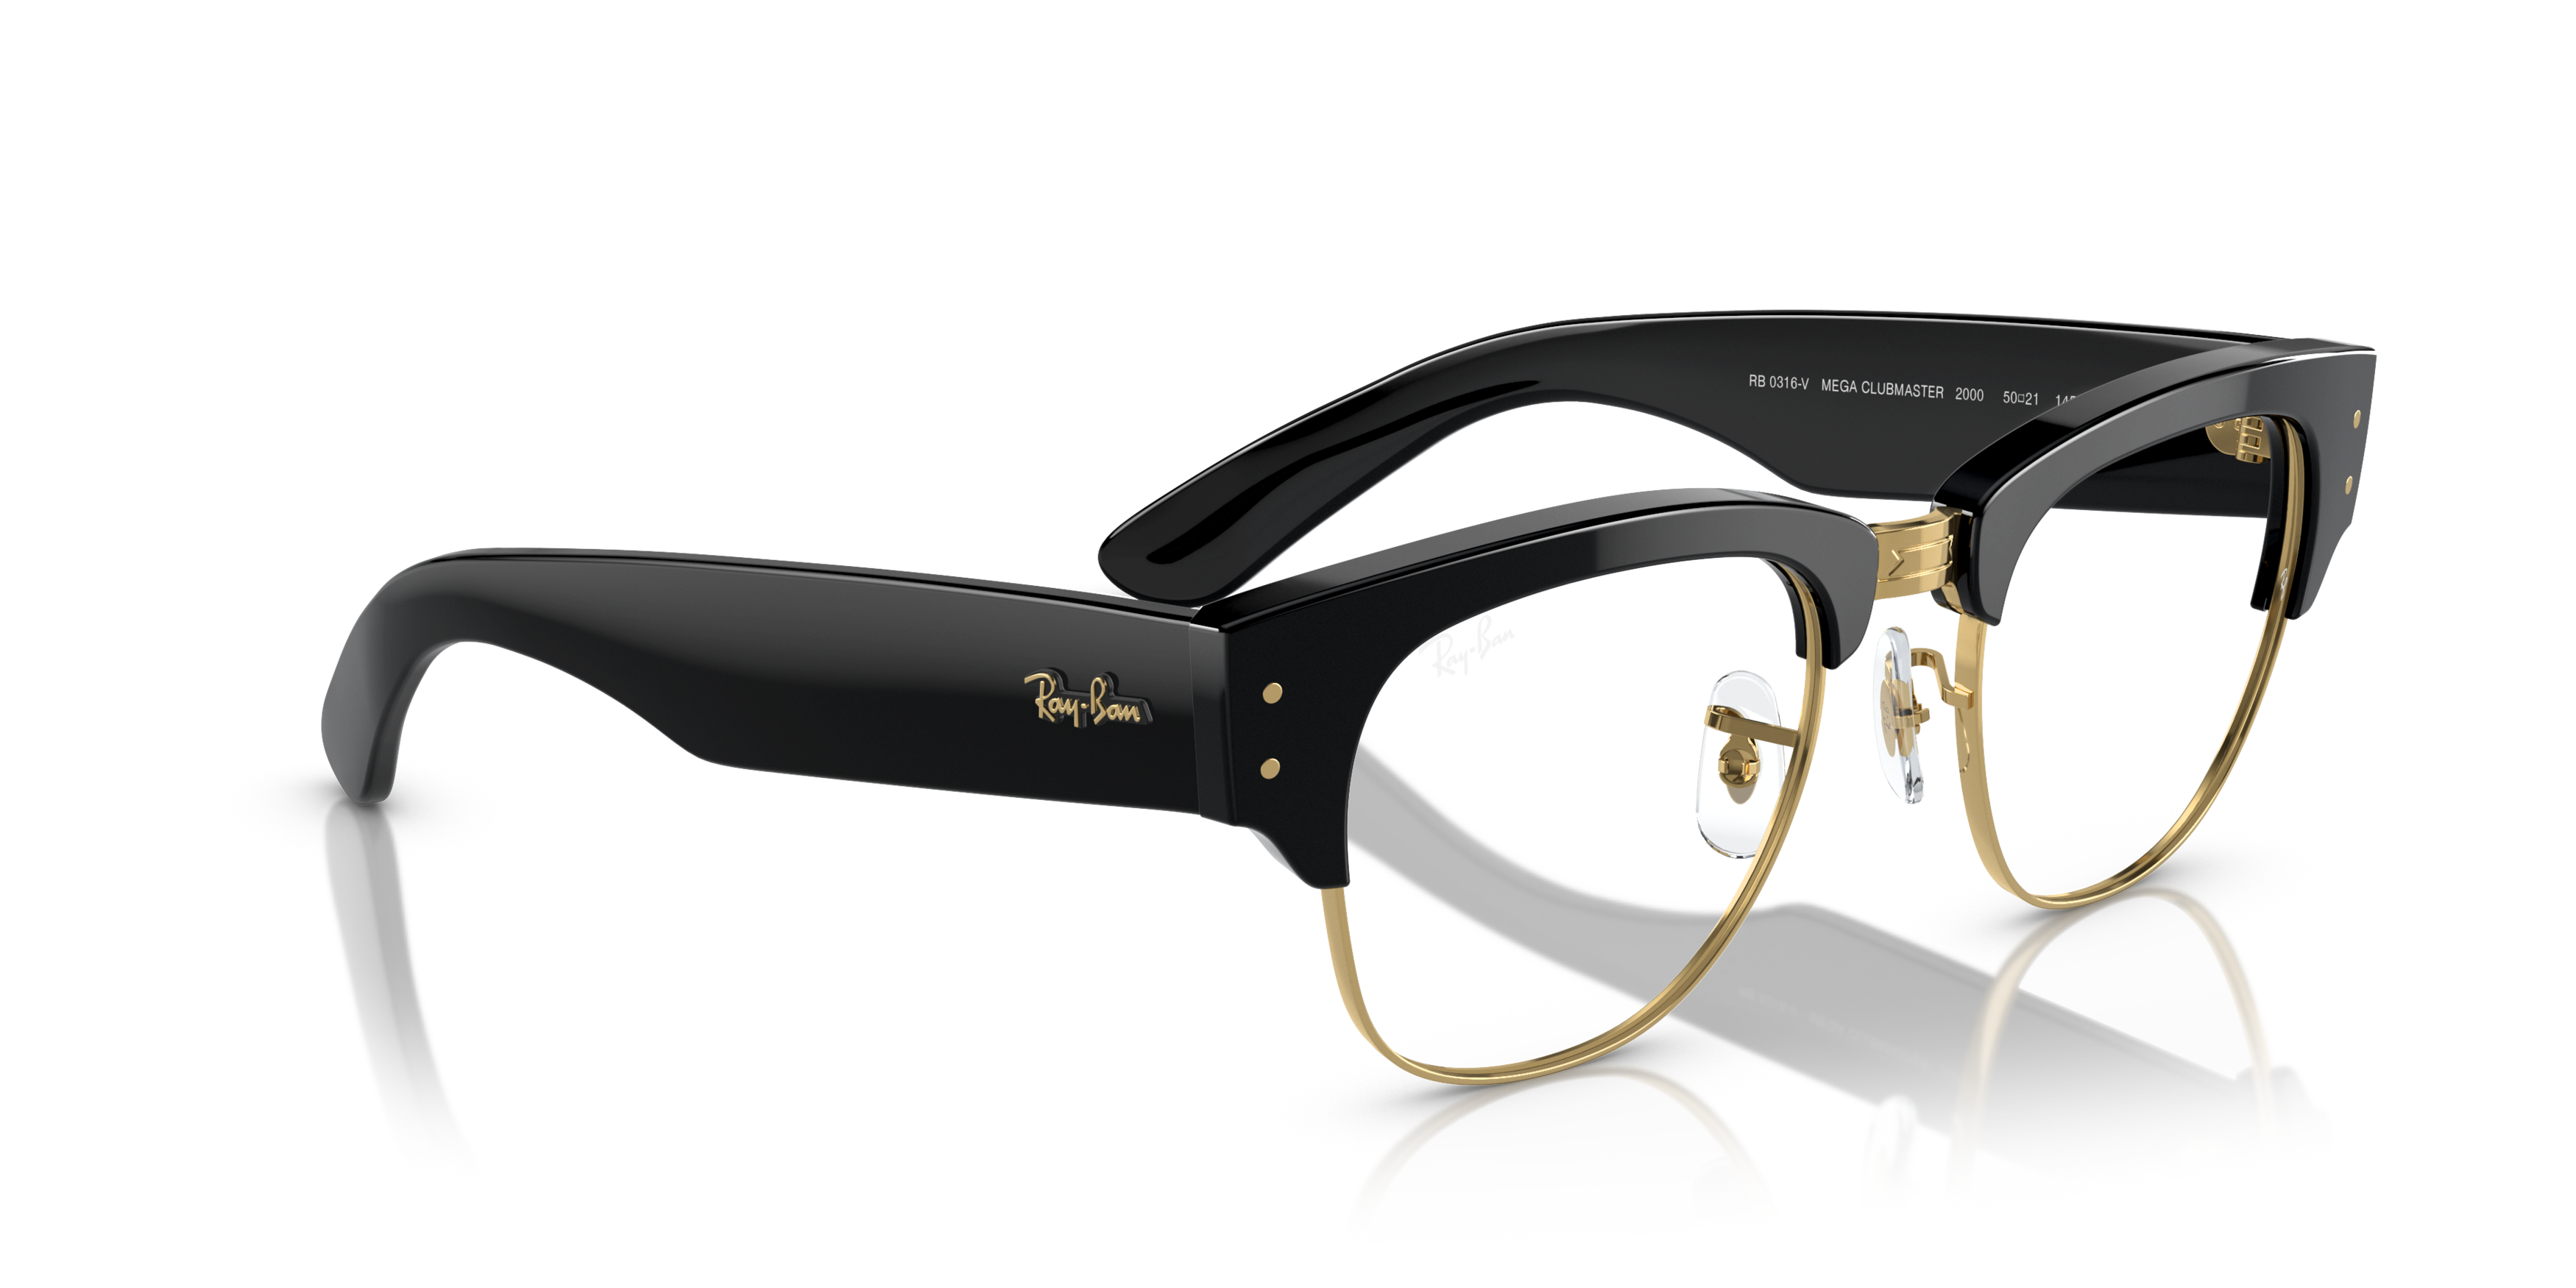 Angle_Right01 Ray-Ban Mega Clubmaster RX 0316V Glasses Transparent / Black, Gold